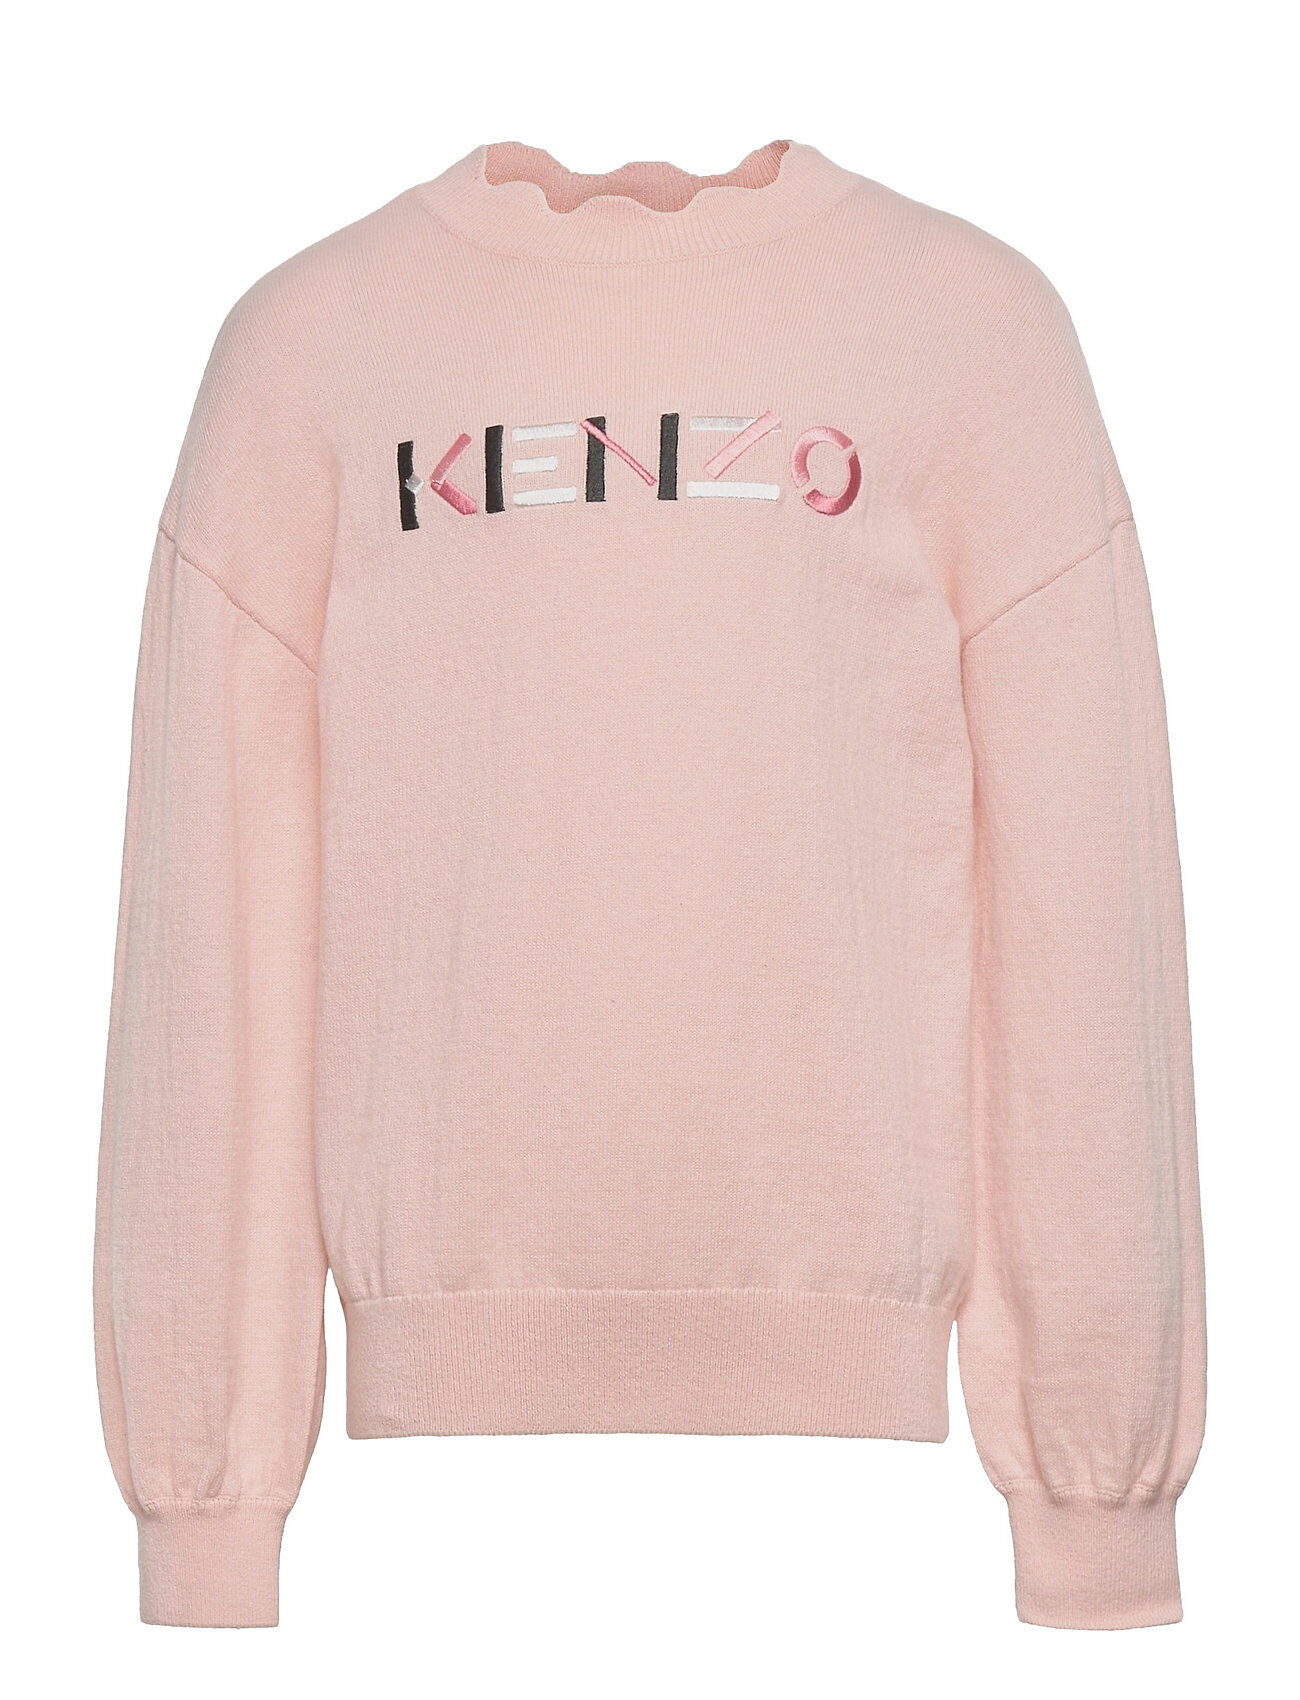 Kenzo Pullover Sweat-shirt Genser Rosa Kenzo